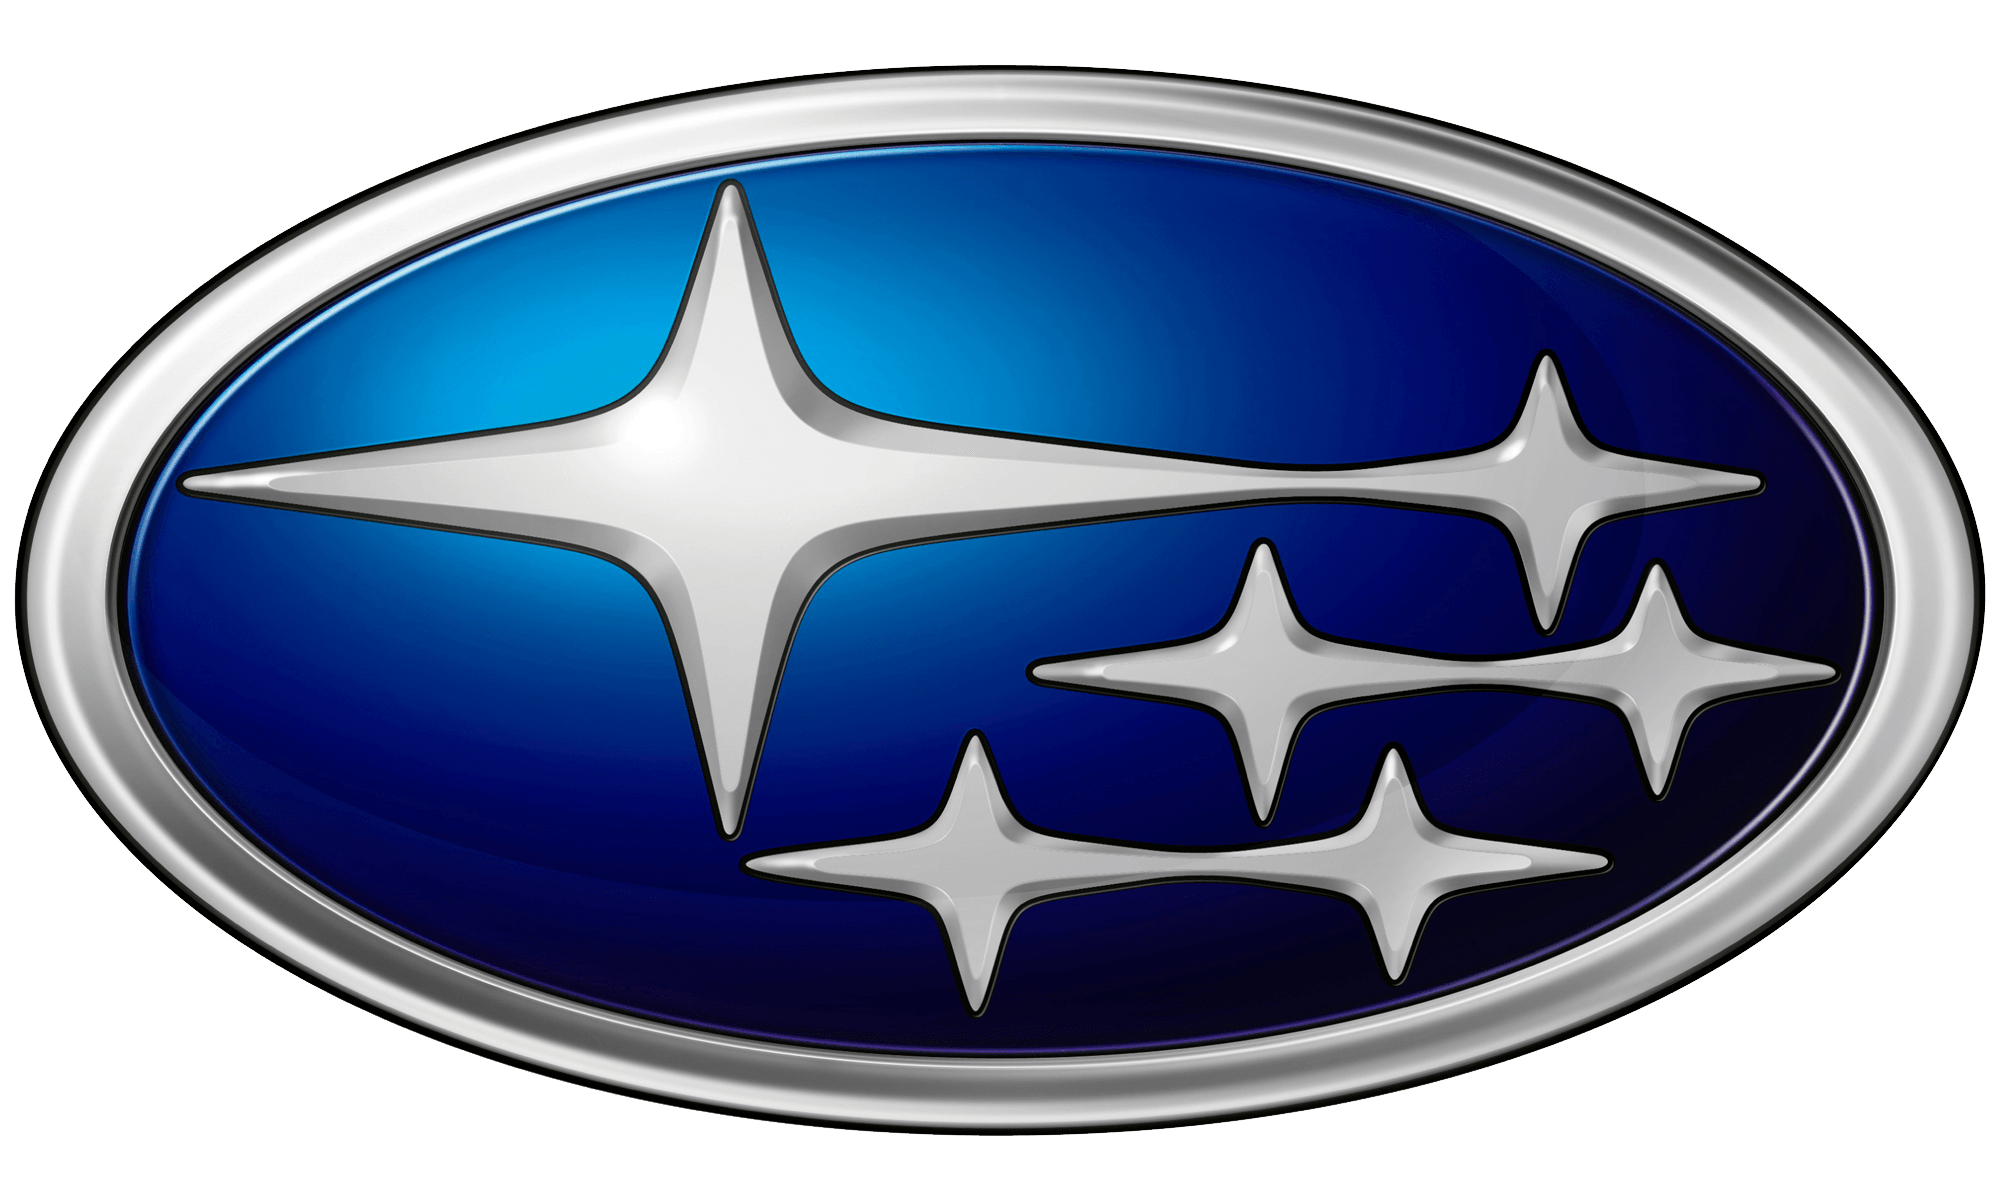 Subaru Models, Reviews, Specs, Prices, Latest  Videos, Factory  Location